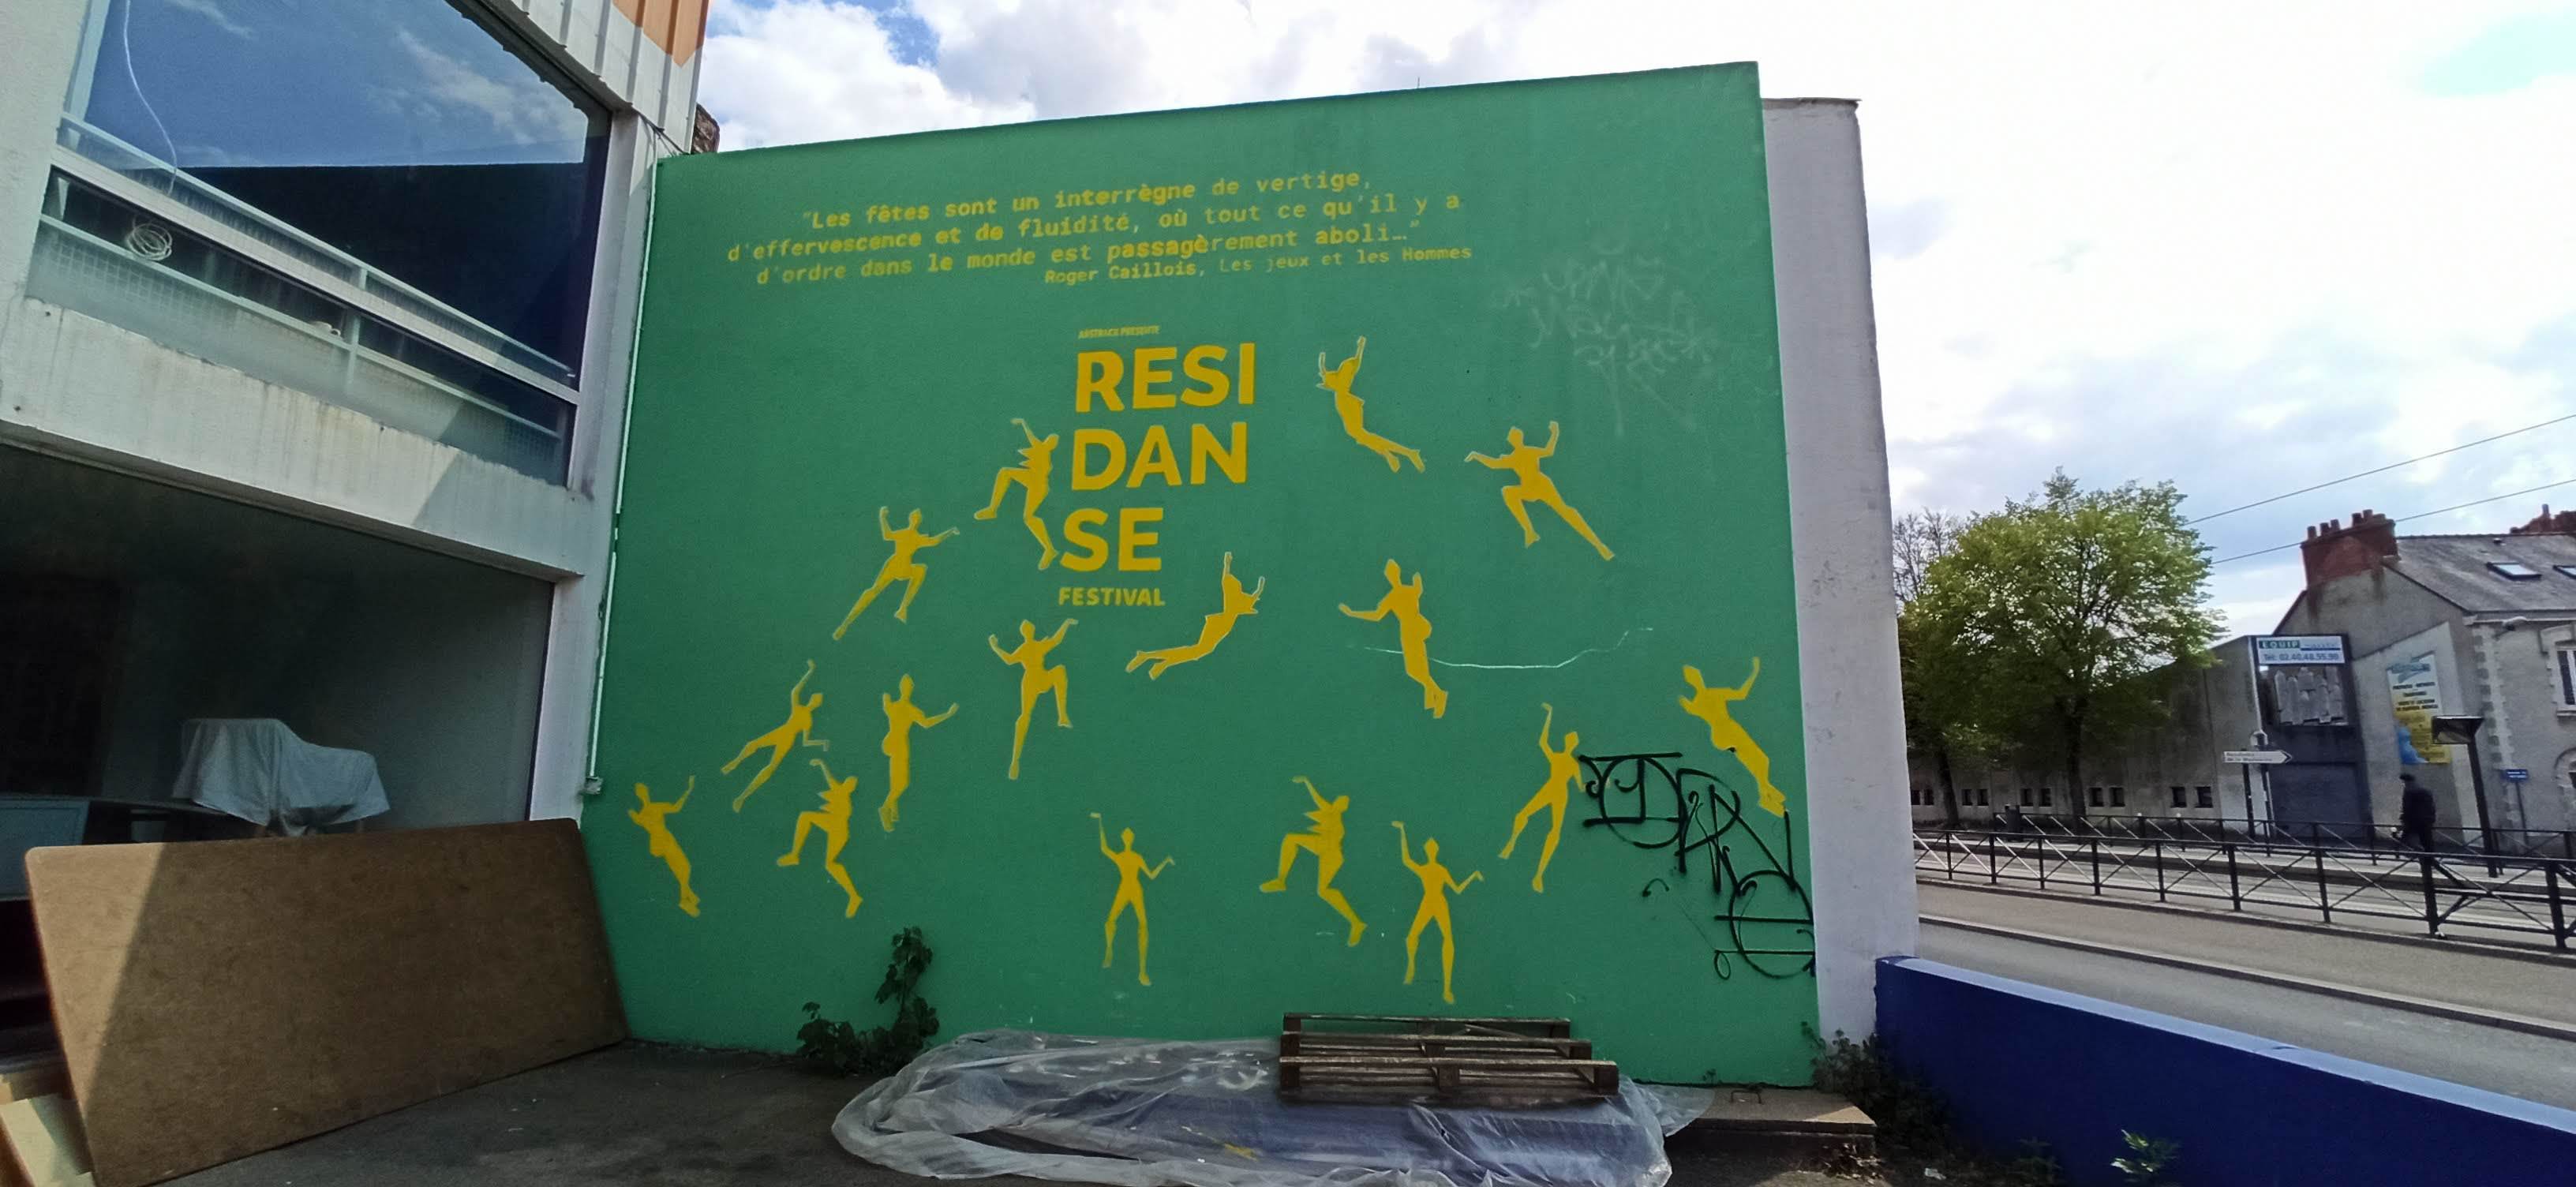 Graffiti 5051 Résidence festival captured by Rabot in Nantes France